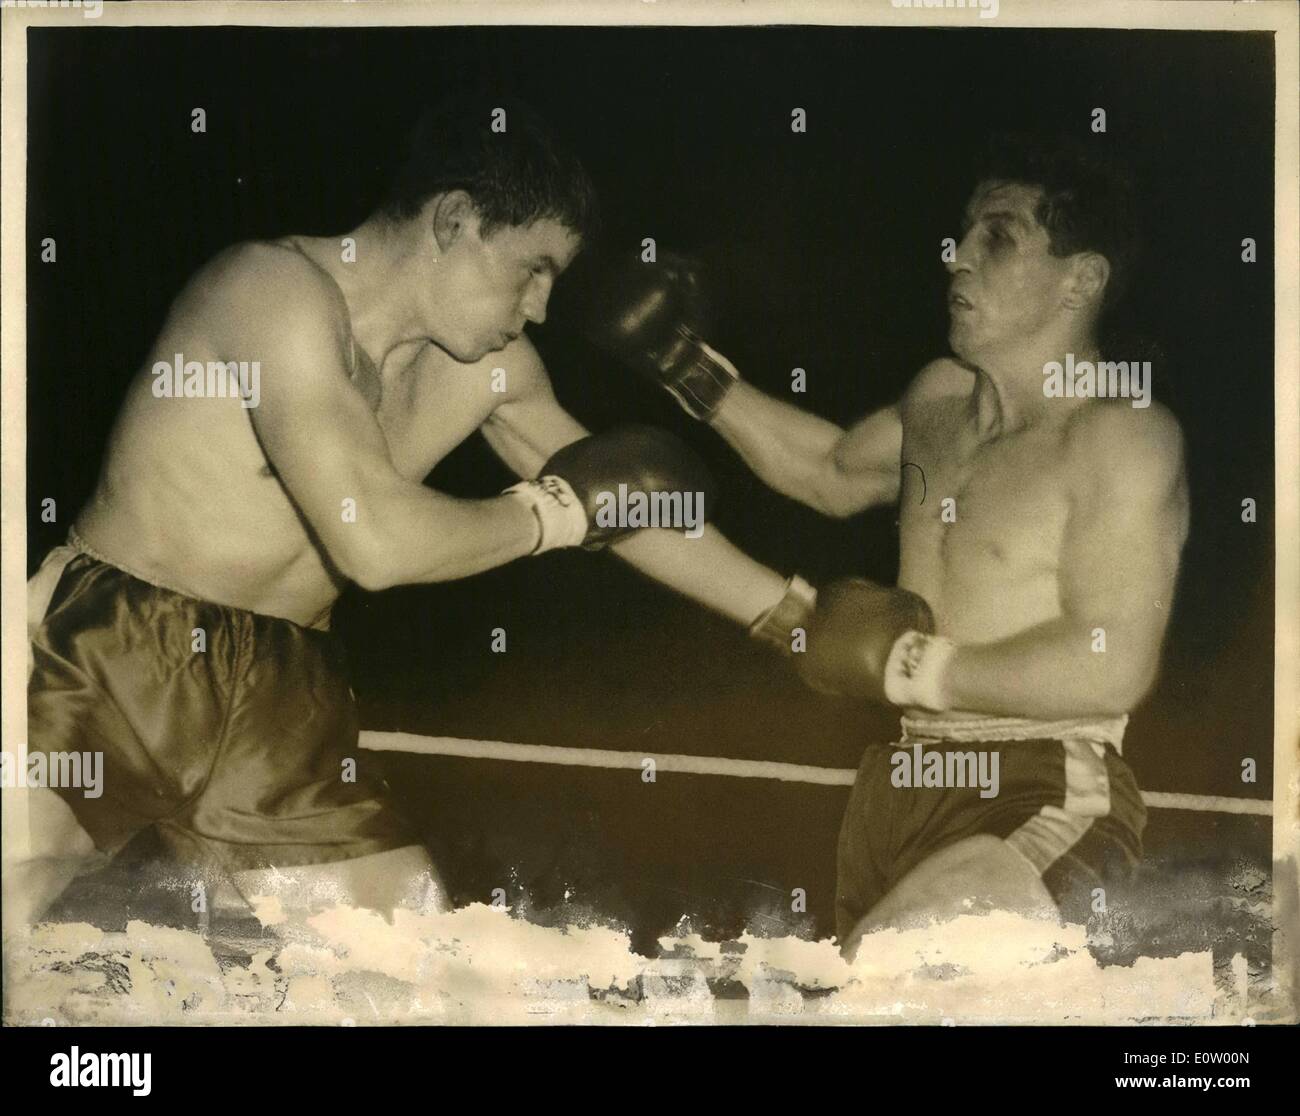 American middleweight fotografías e imágenes de alta resolución - Alamy